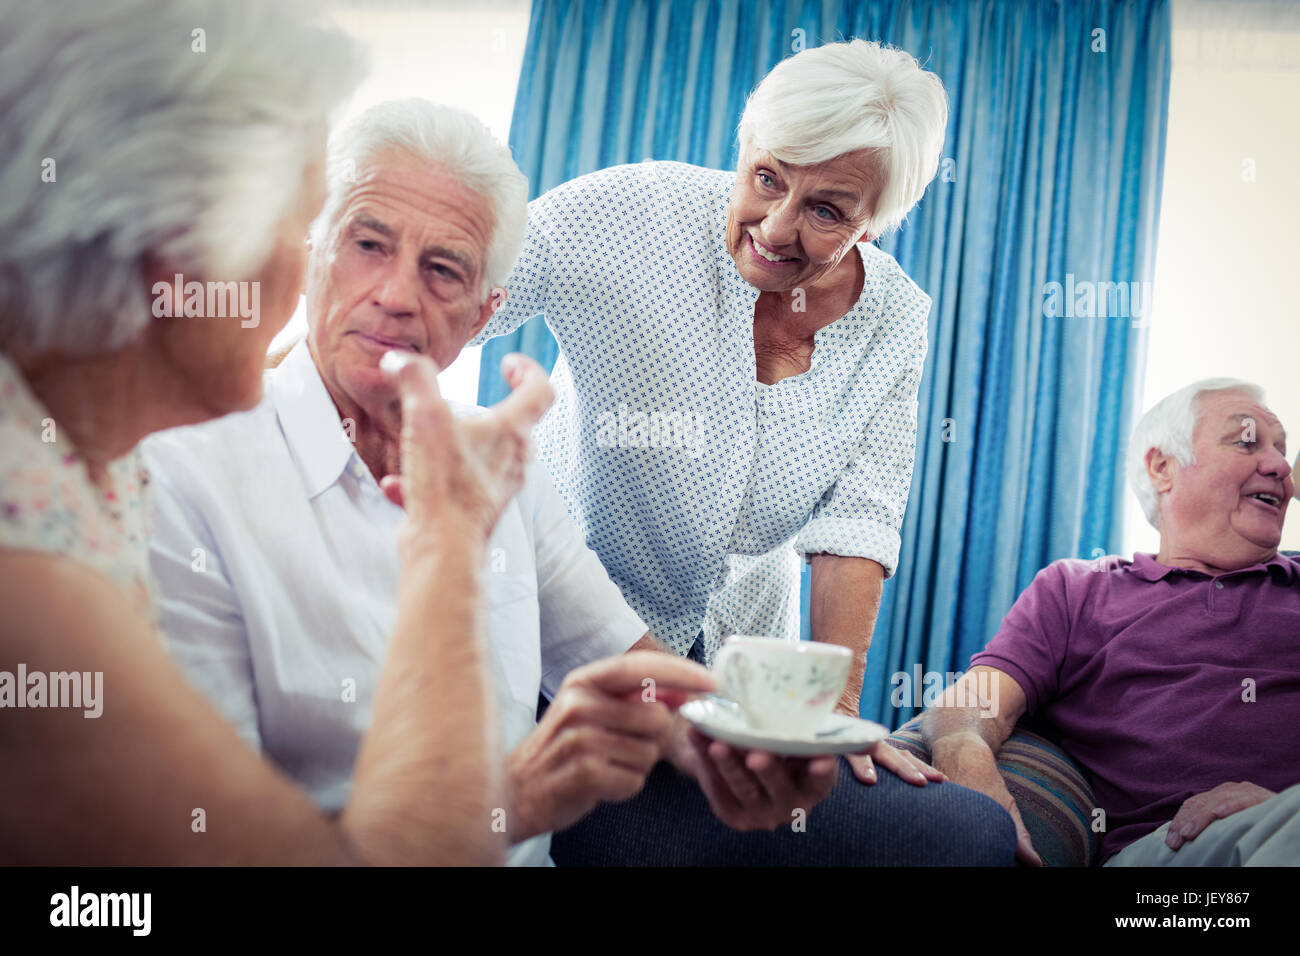 Group of seniors interacting Stock Photo